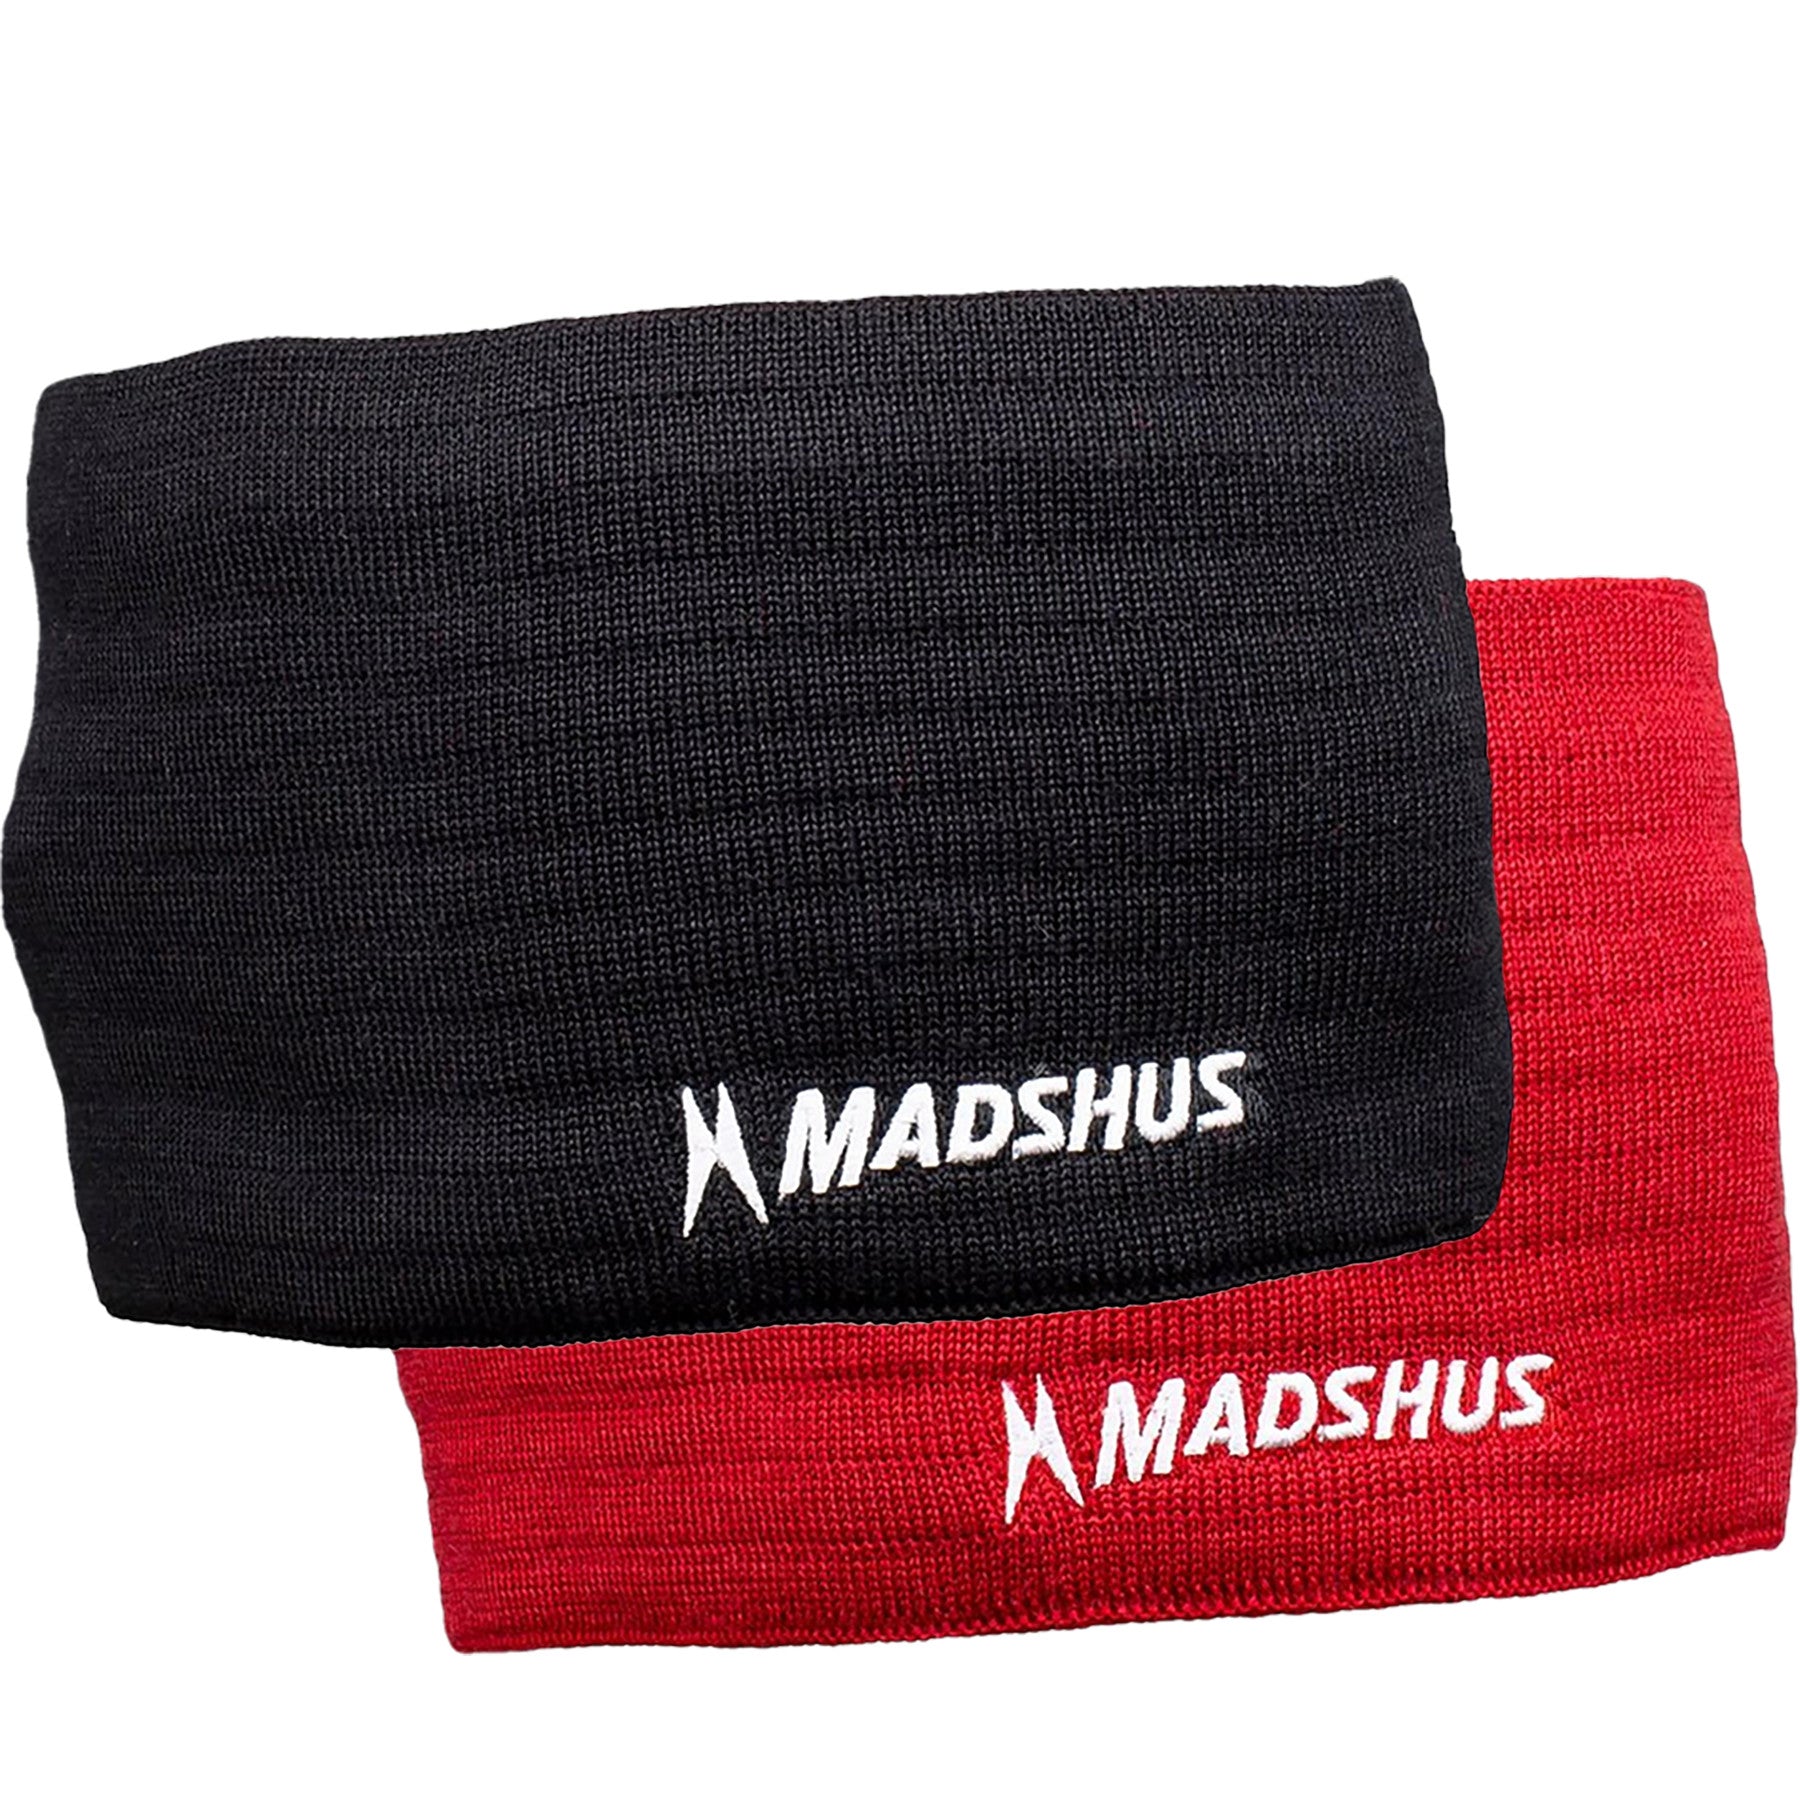 Madshus M Headband 2021